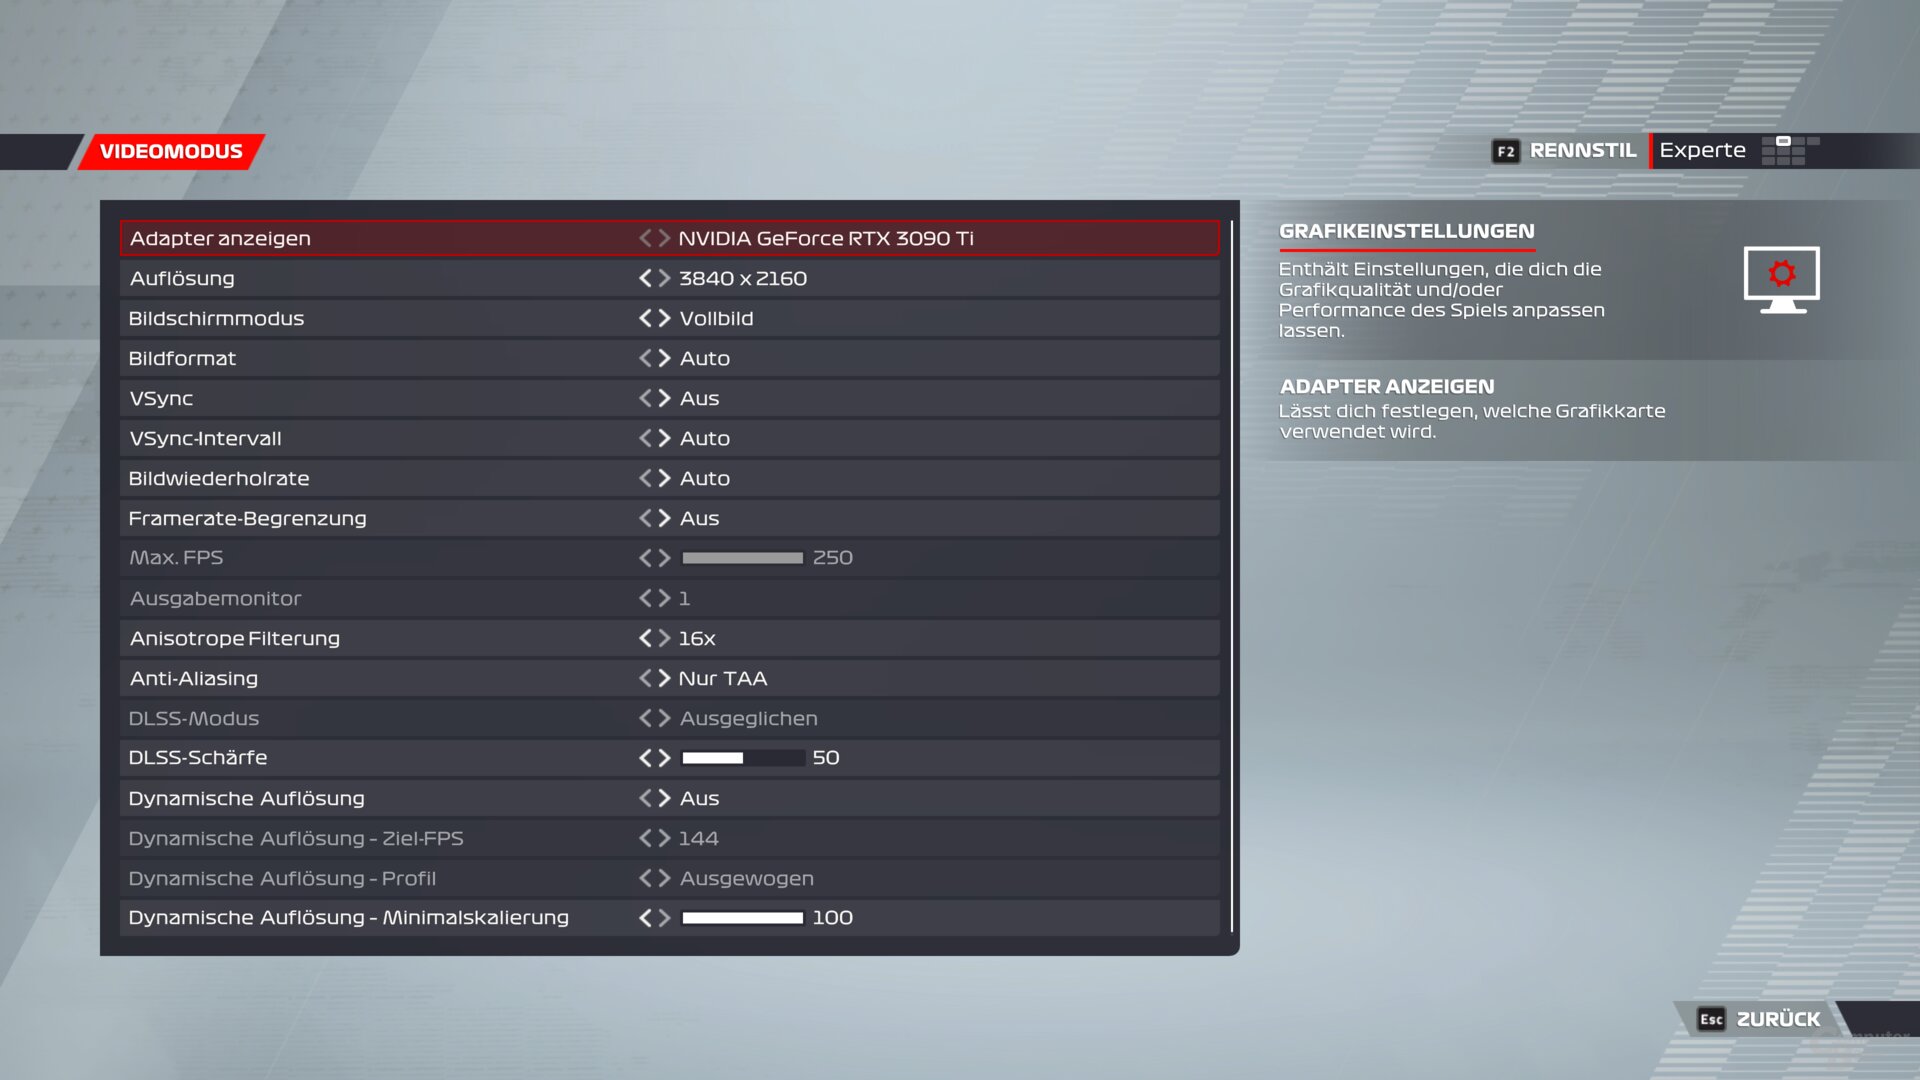 The graphics menu of F1 22